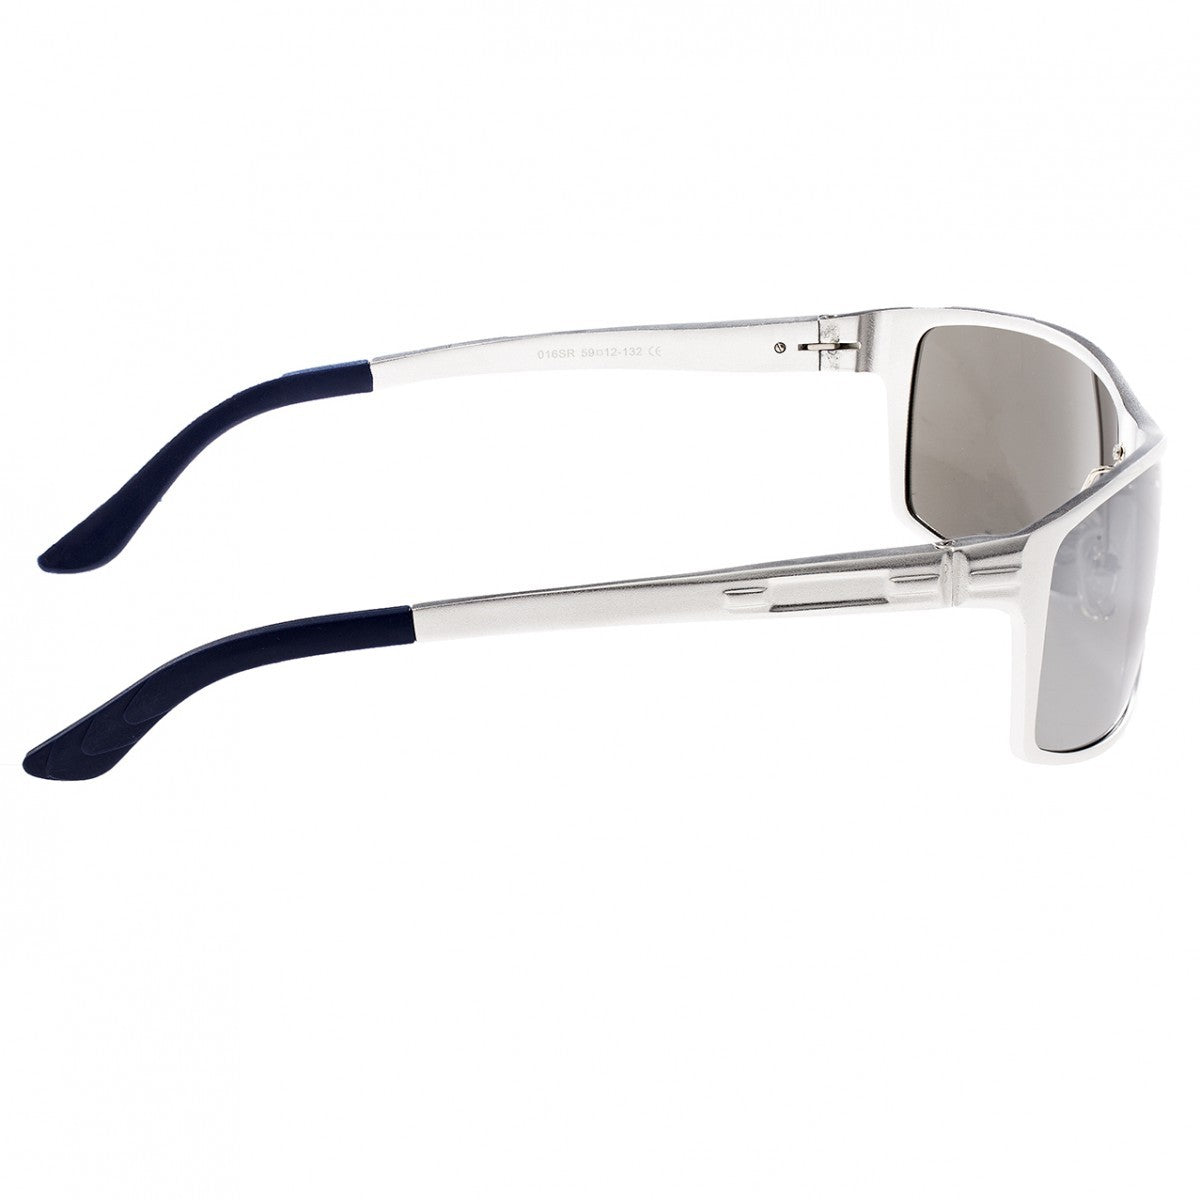 Breed Kaskade Aluminium Polarized Sunglasses - Silver/Silver - BSG016SR